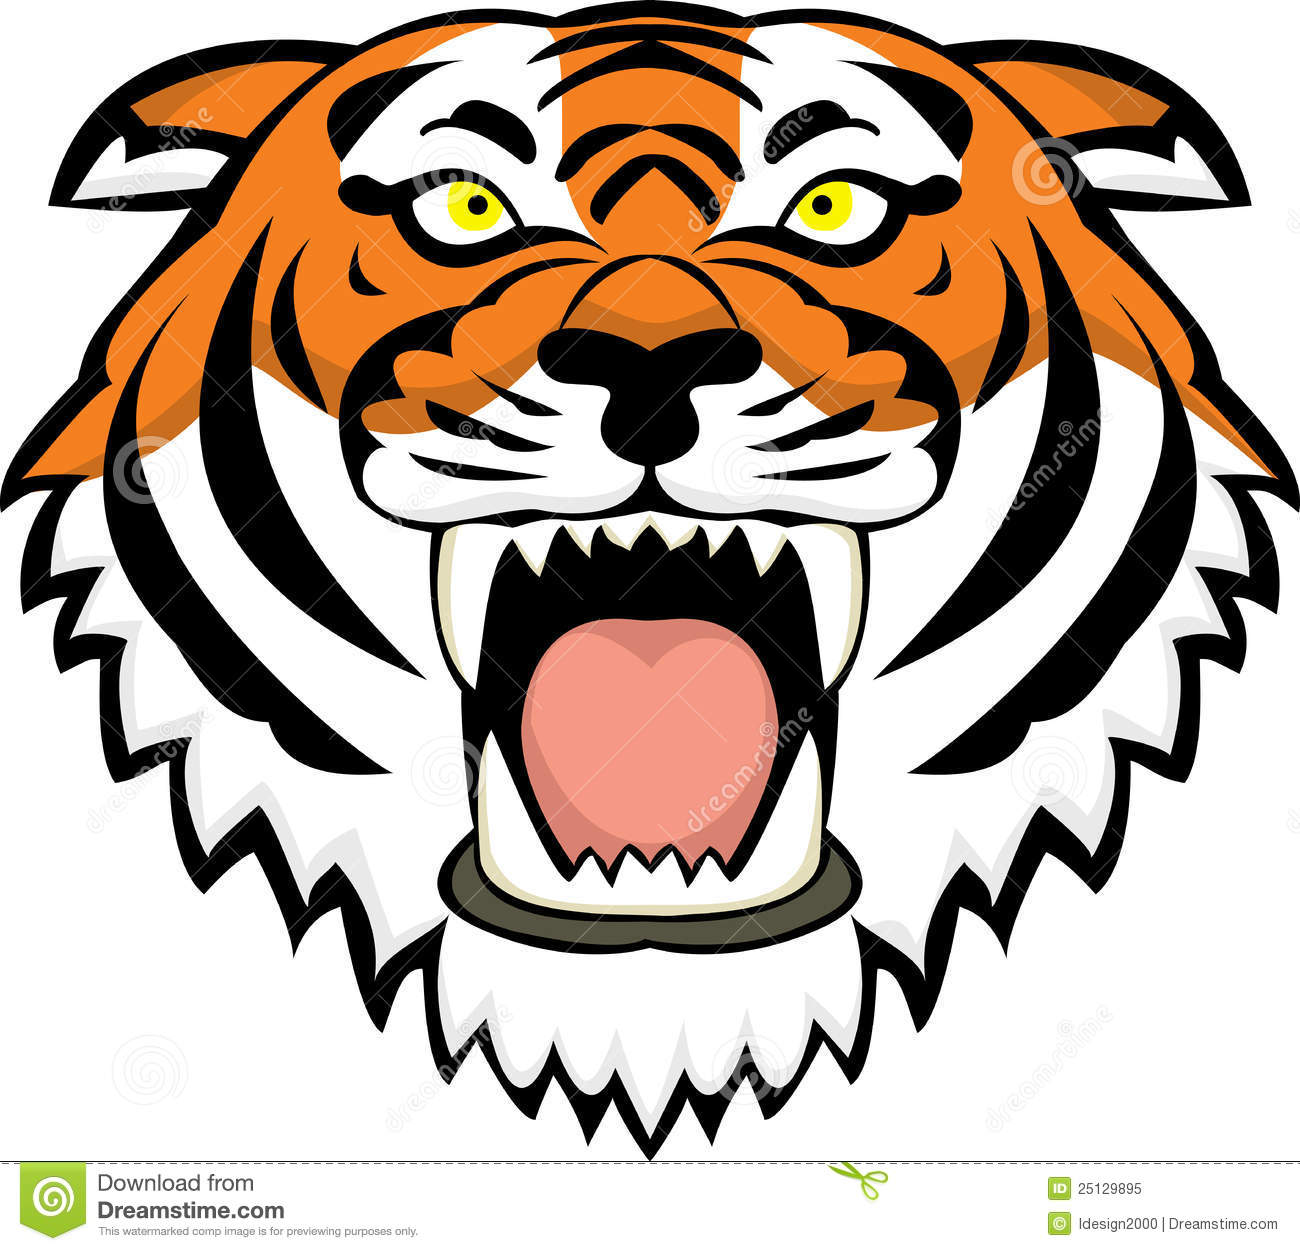 Small roaring tiger head clip